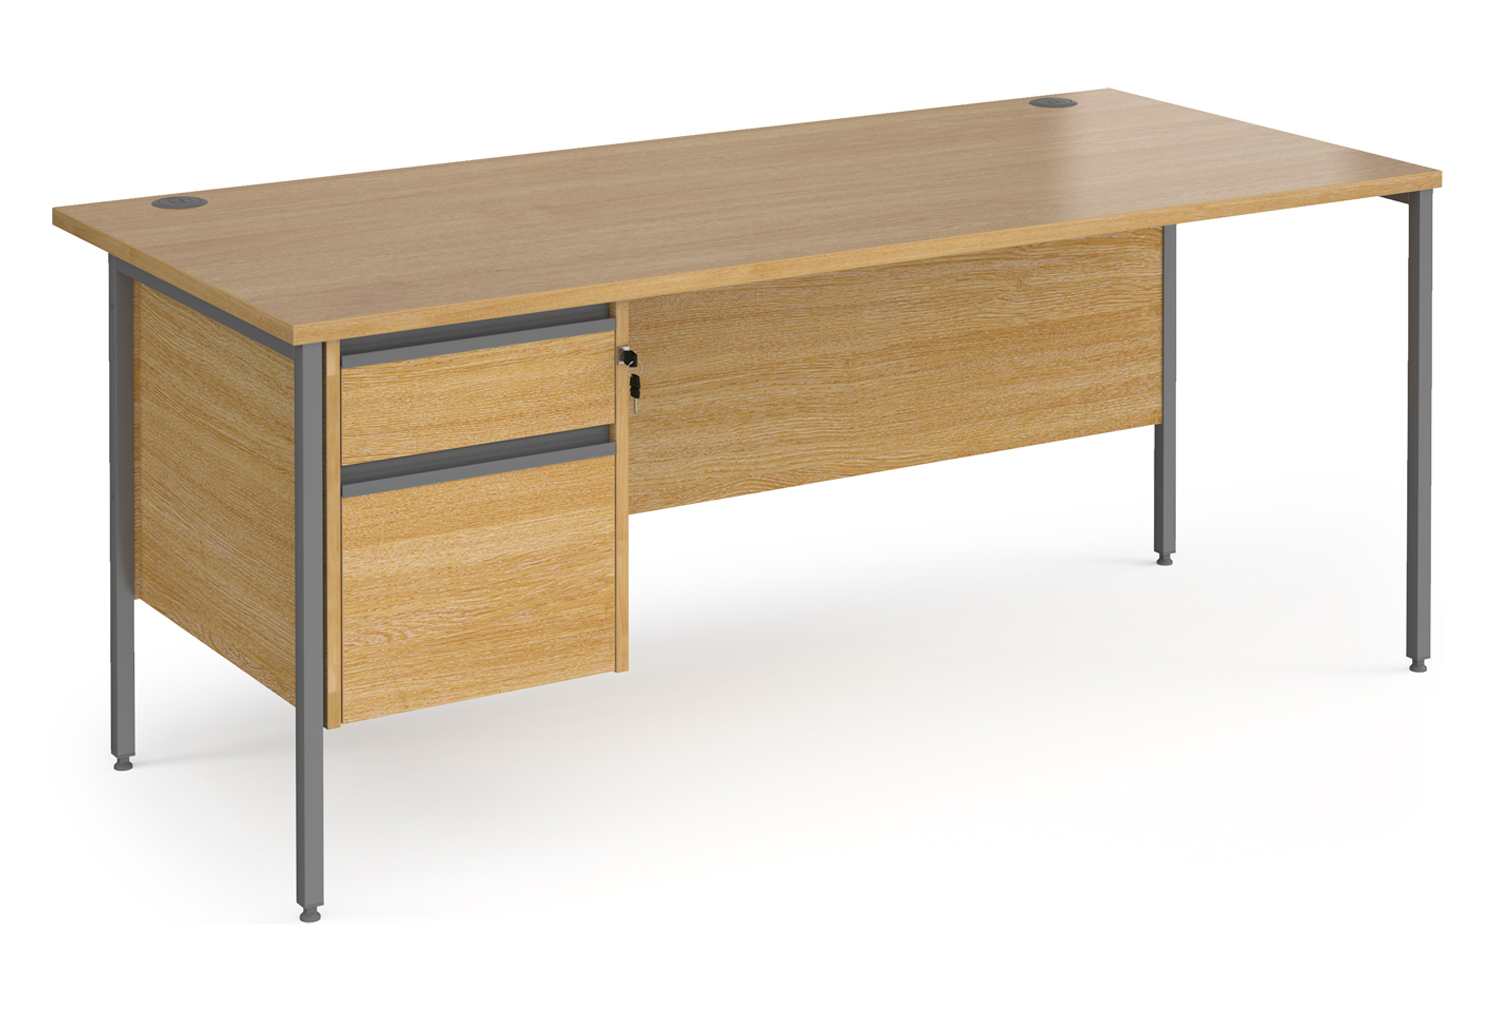 Value Line Classic+ Rectangular H-Leg Office Desk 2 Drawers (Graphite Leg), 180wx80dx73h (cm), Oak, Express Delivery